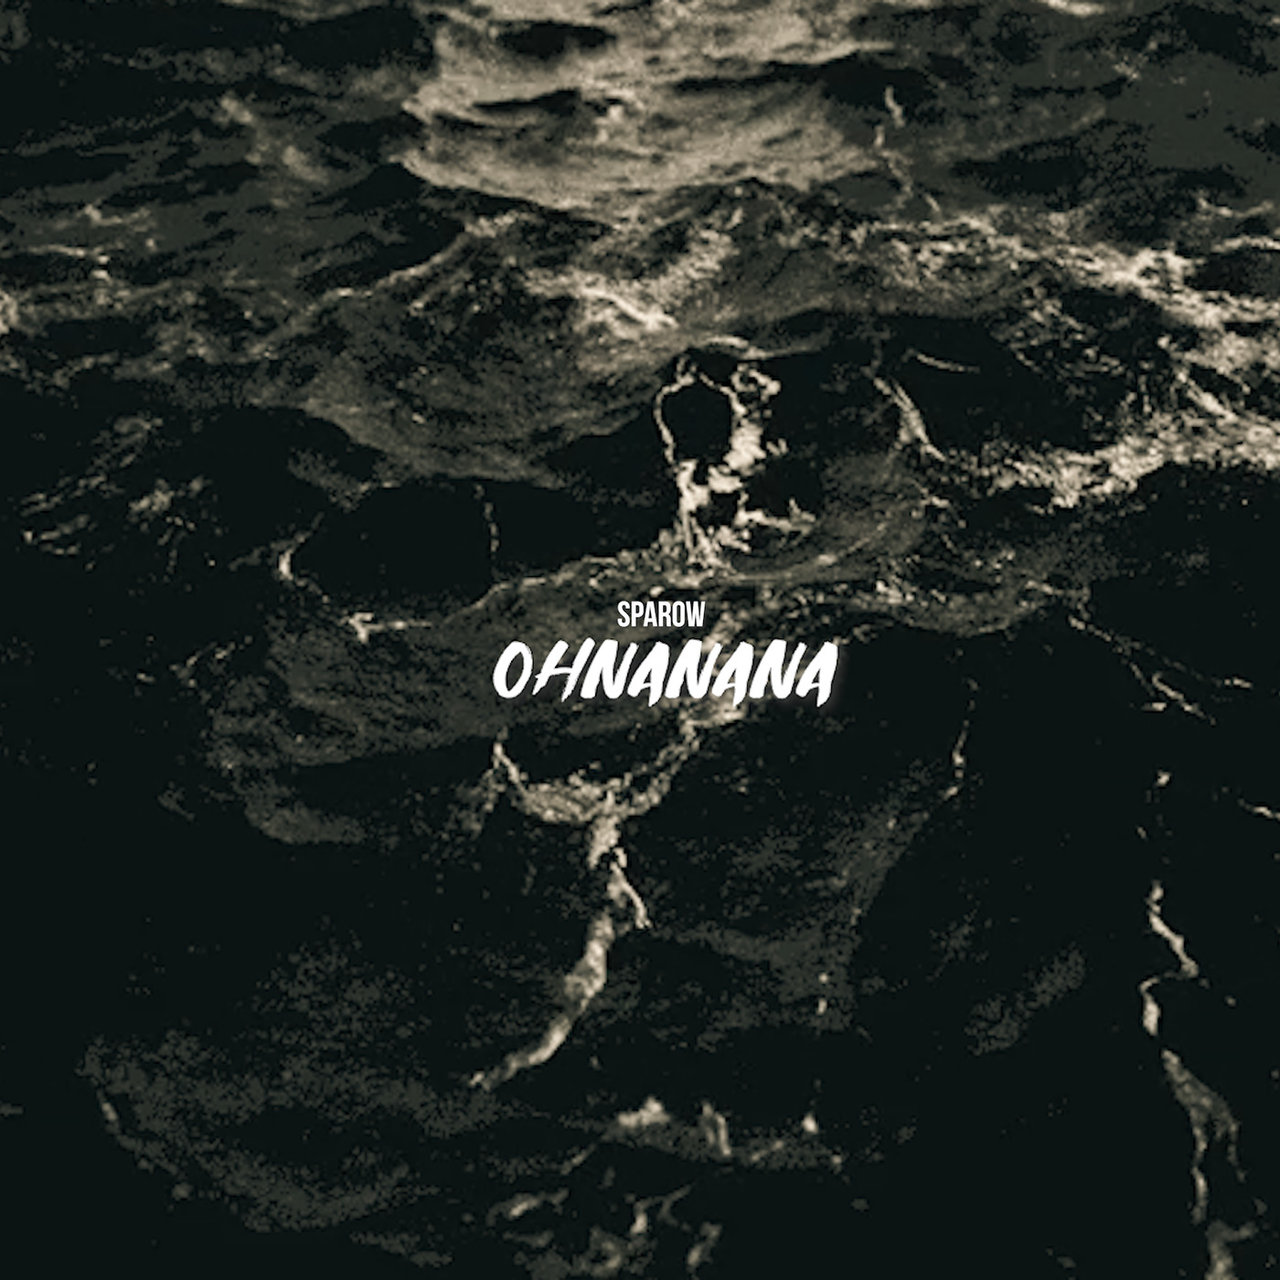 Sparow - Ohnanana (Cover)